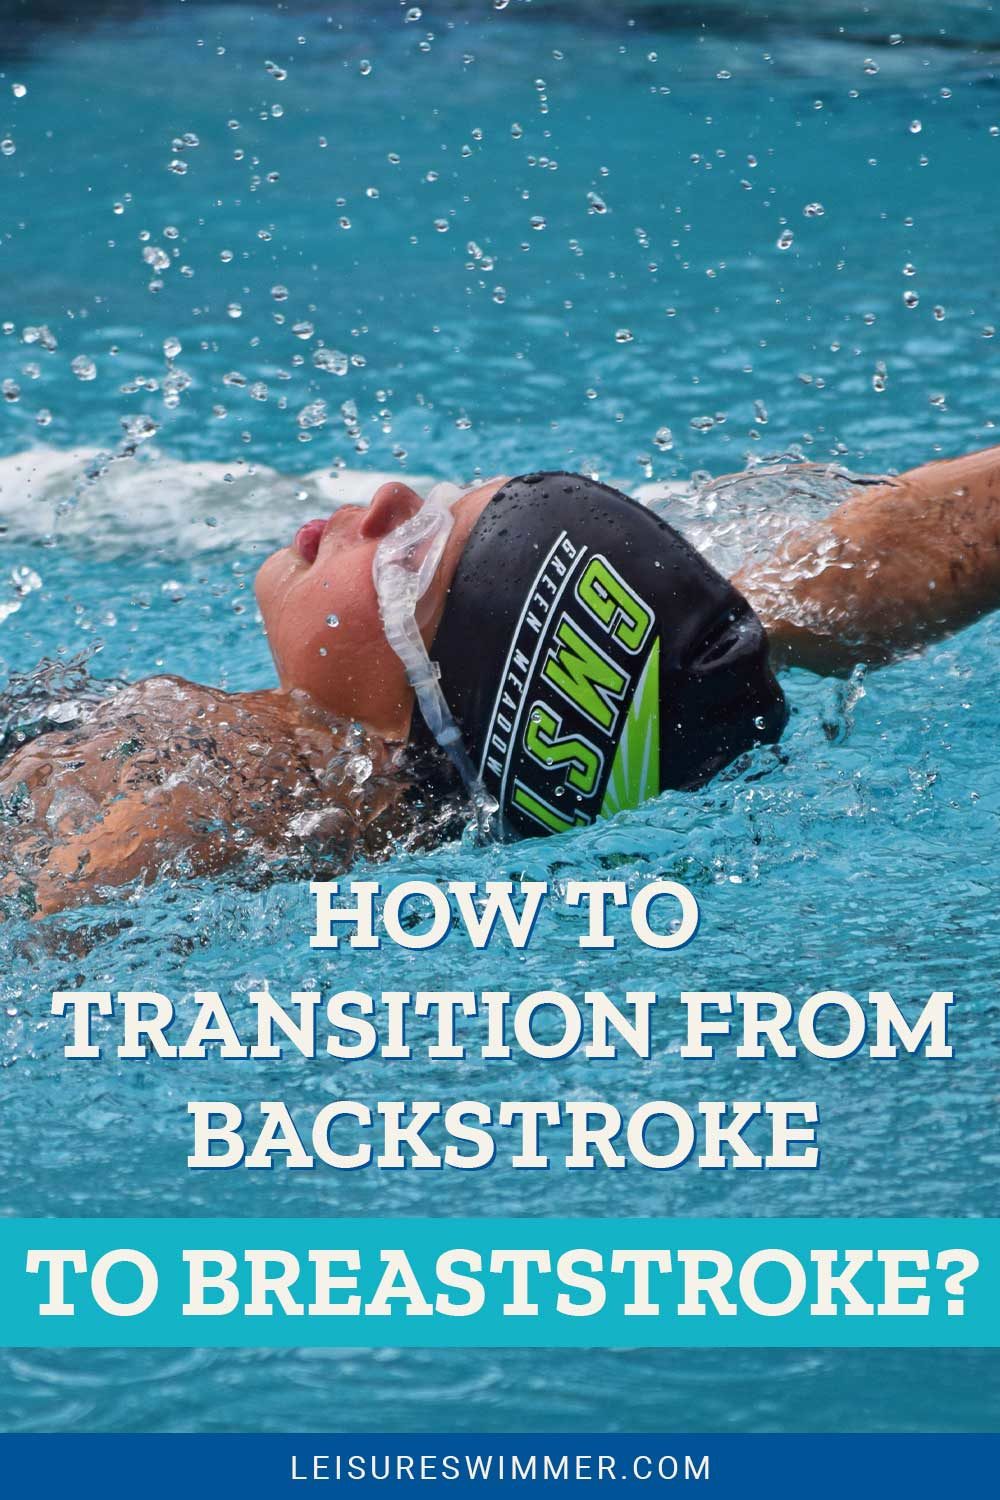 Swimmer doing backstroke - How to Transition from Backstroke to Breaststroke?